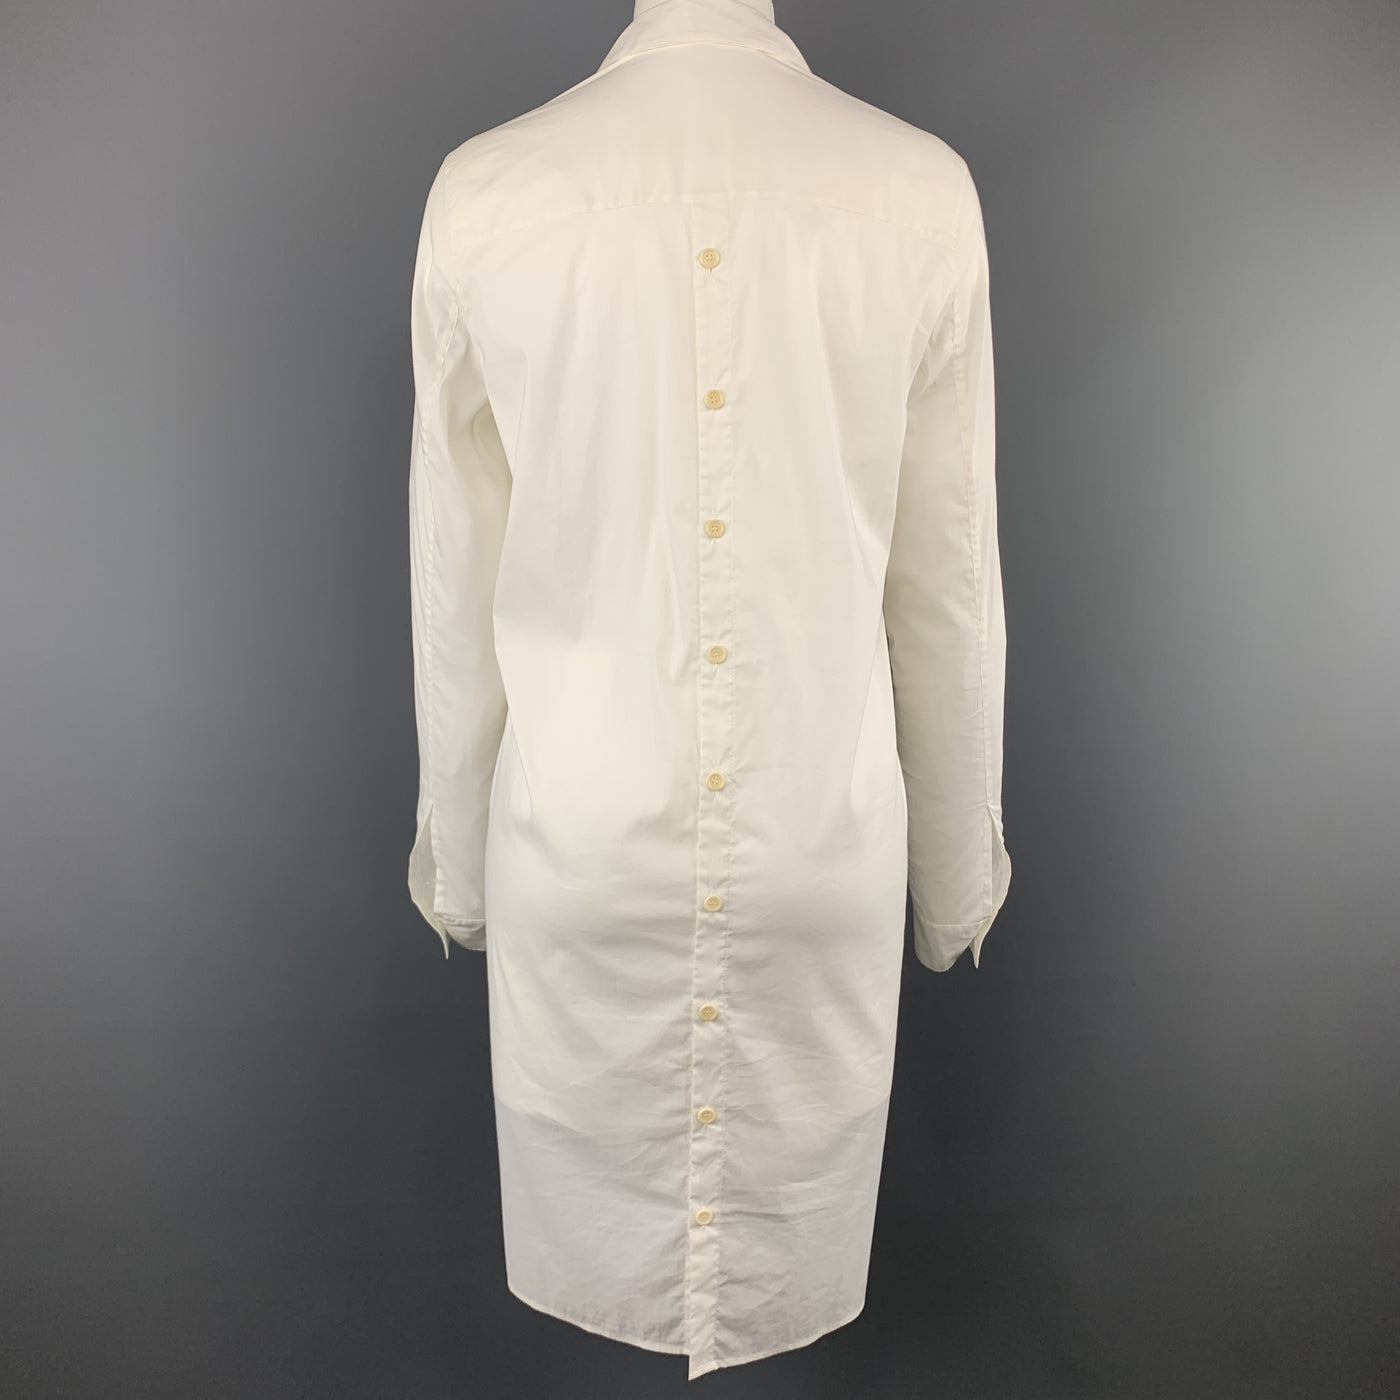 HELMUT LANG Size 4 White Lapel Shirt Dress